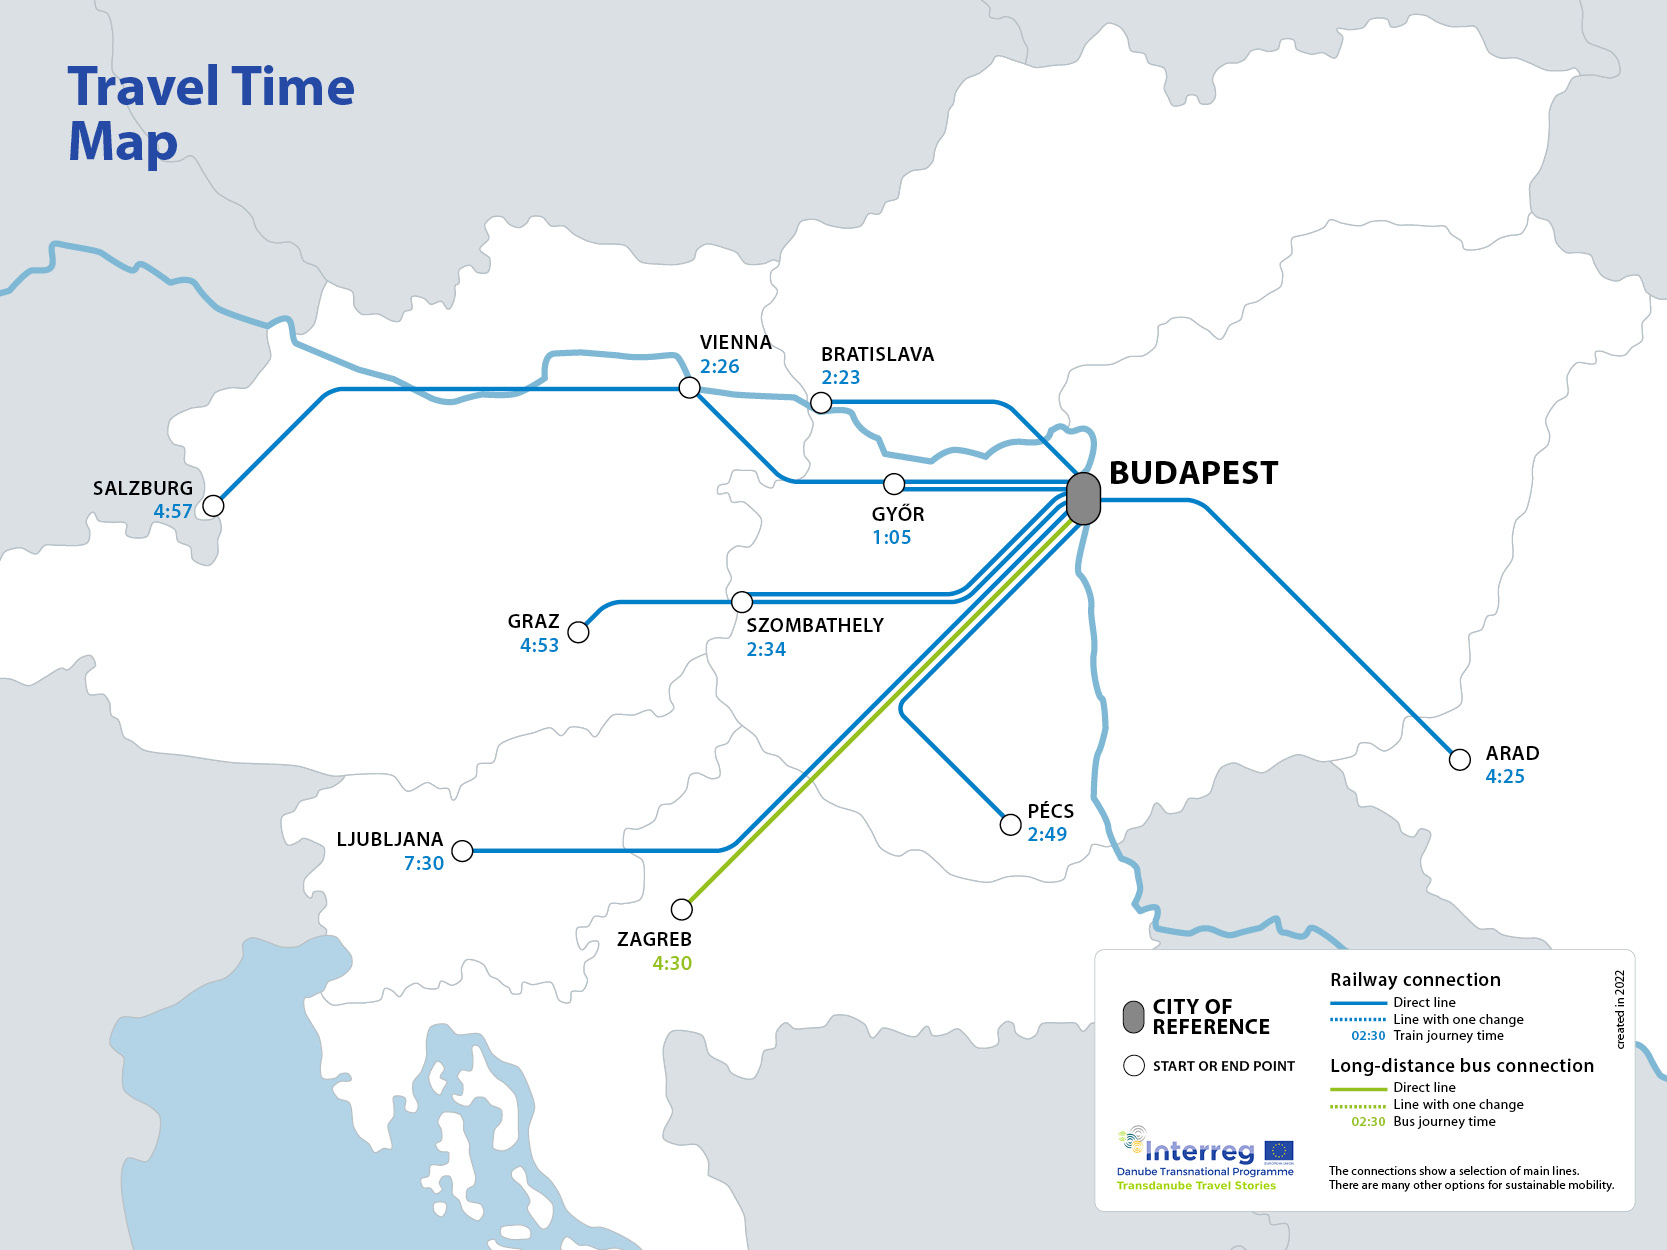 Travel Time Map - Budapest (Vergrößerte Ansicht)